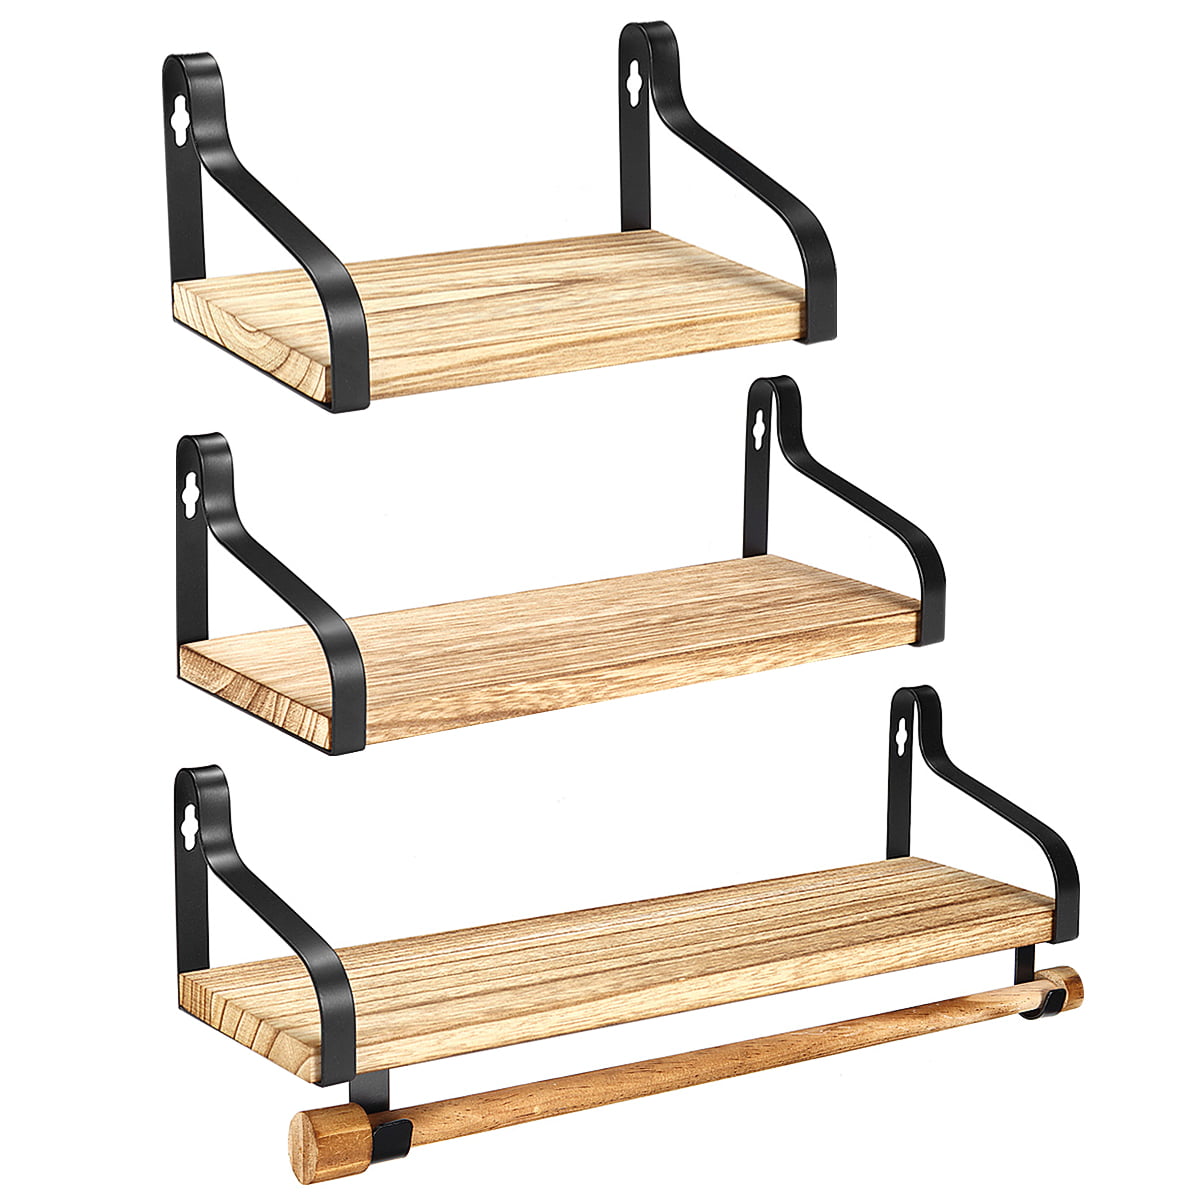 Details about   3 PCS Wall Floating Shelves Wood for Bathroom Living Room Bedroom Office 